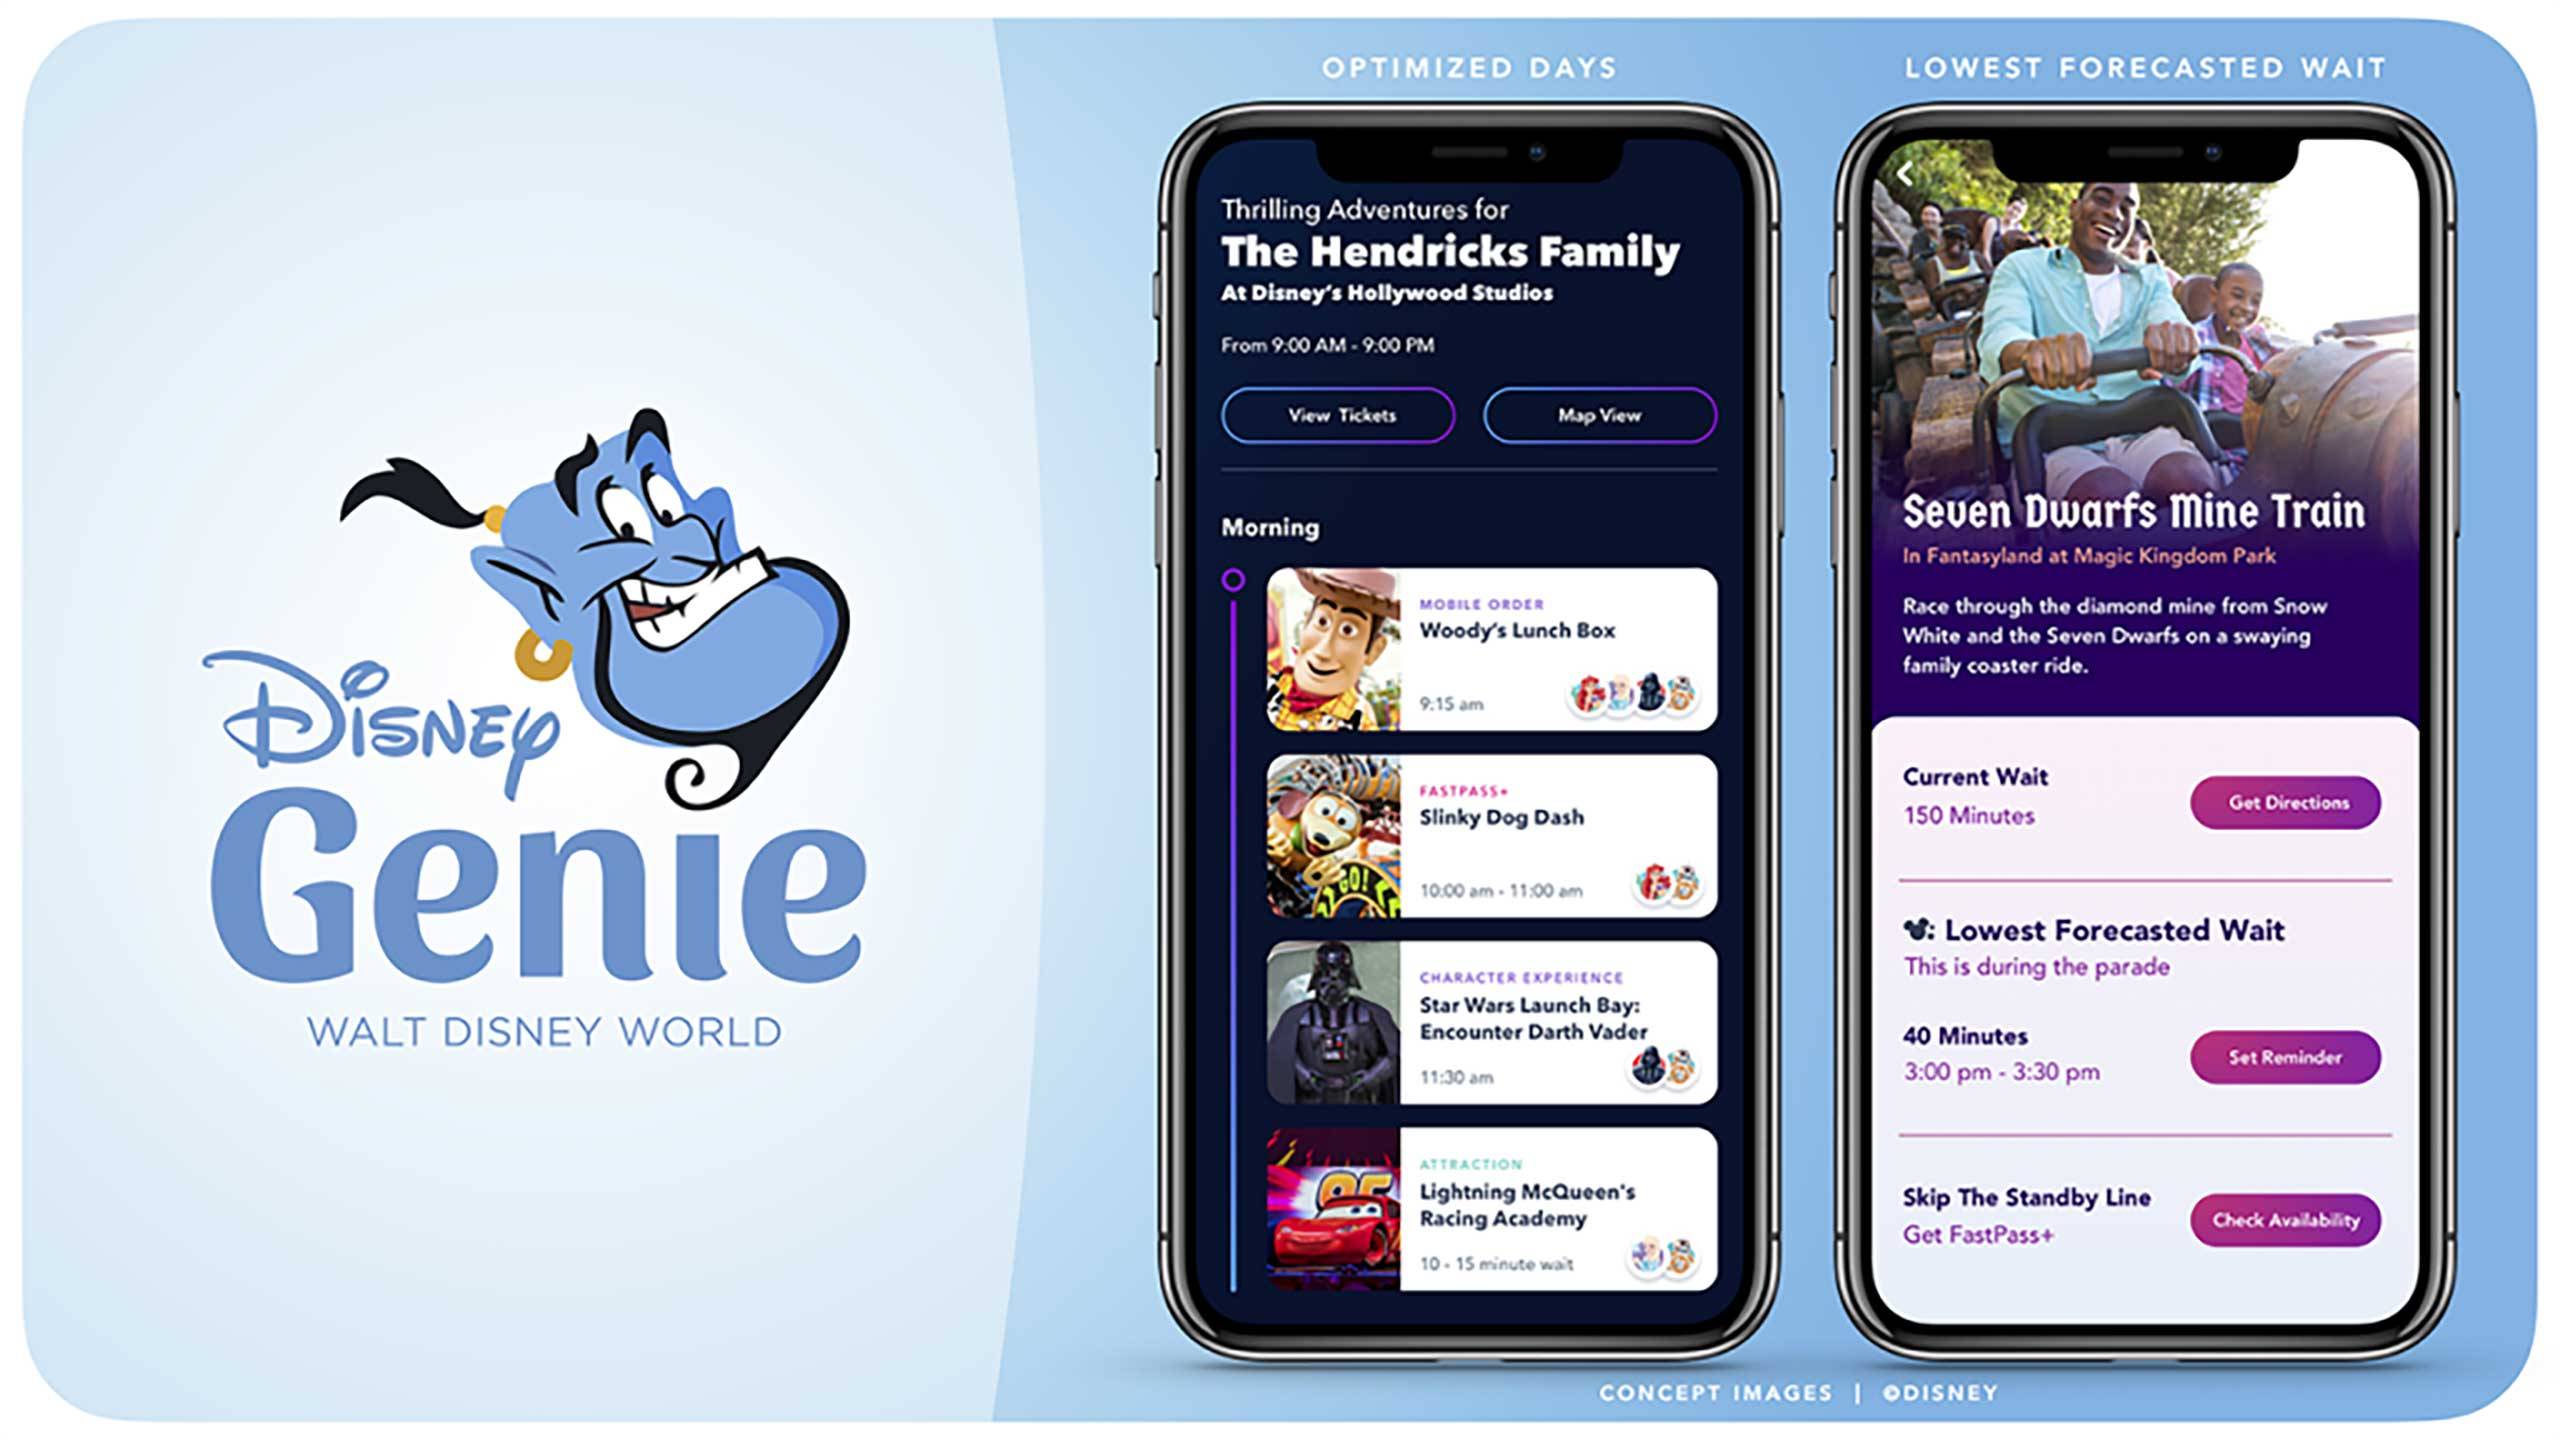 Disney Genie digital assistant coming to Walt Disney World in 2020